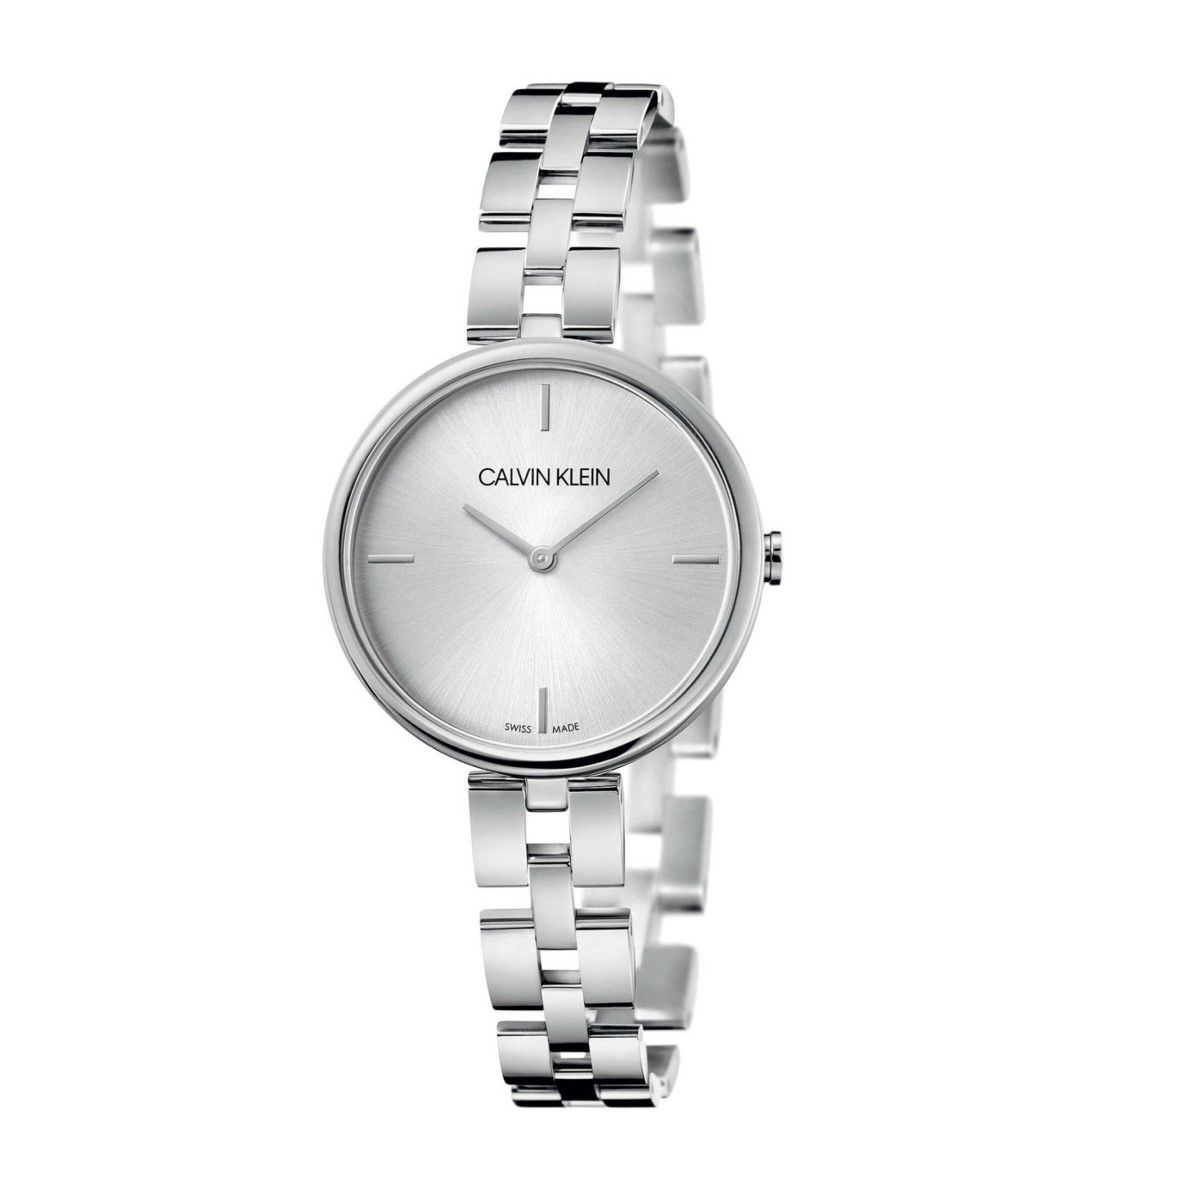 Buy Calvin Klein Ladies Elegant Watch - Silver Tone Online